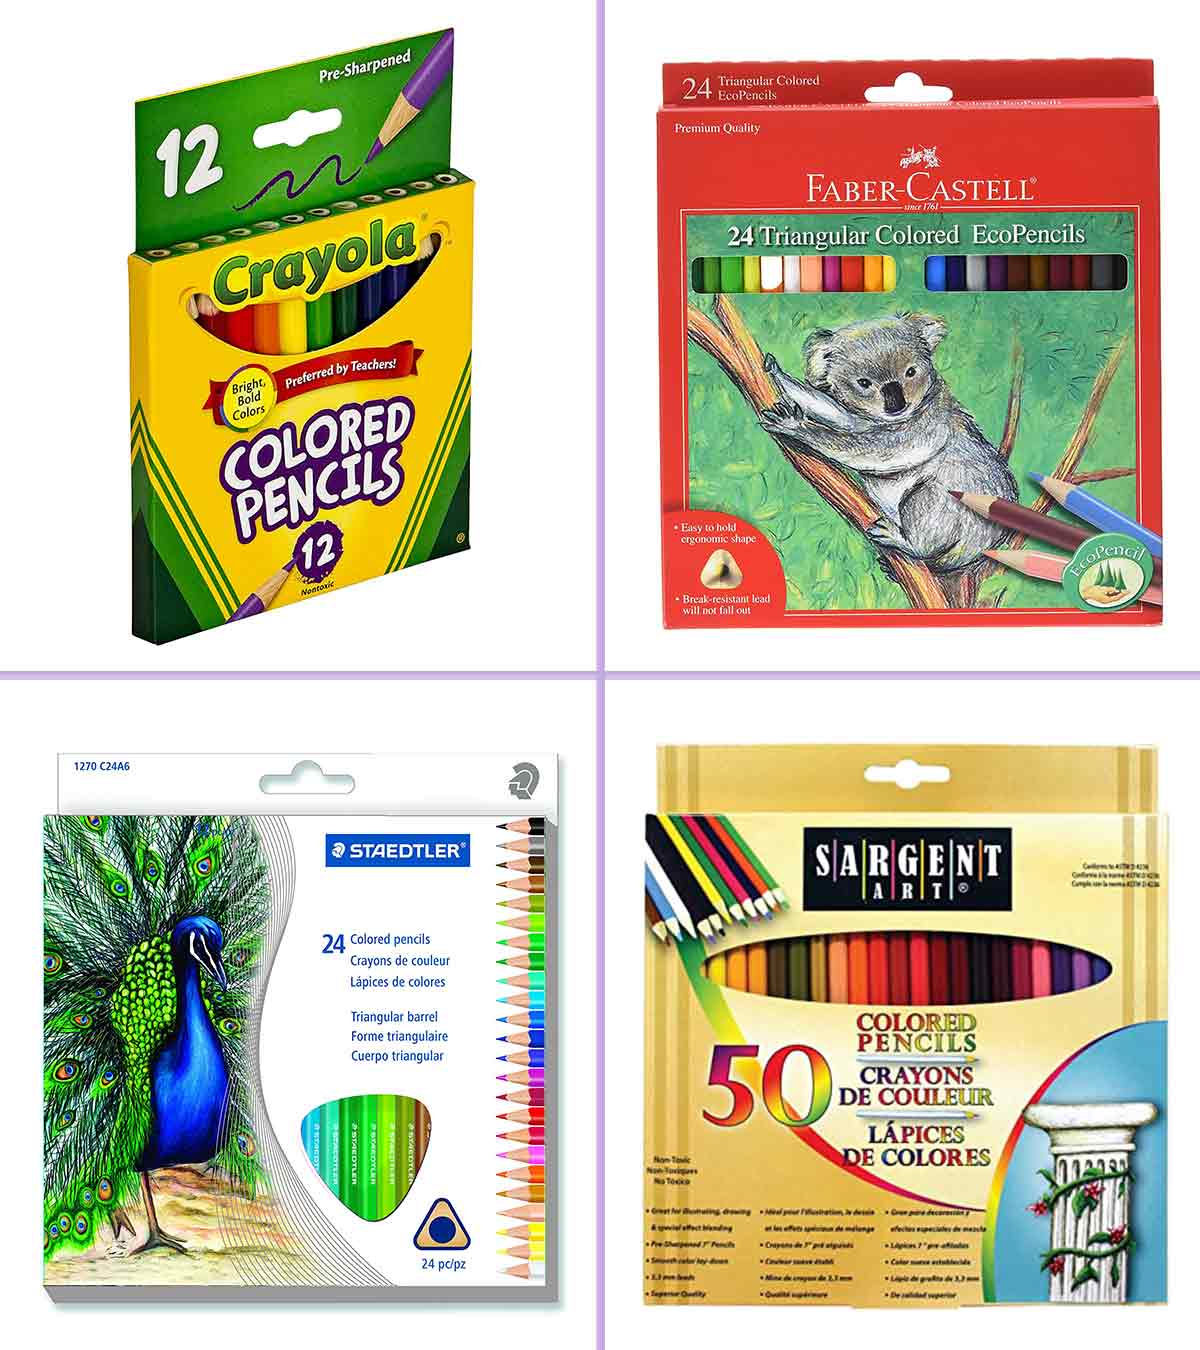 Crayola Metallic Colored Pencils 8-Color Set | Kids' Crafts